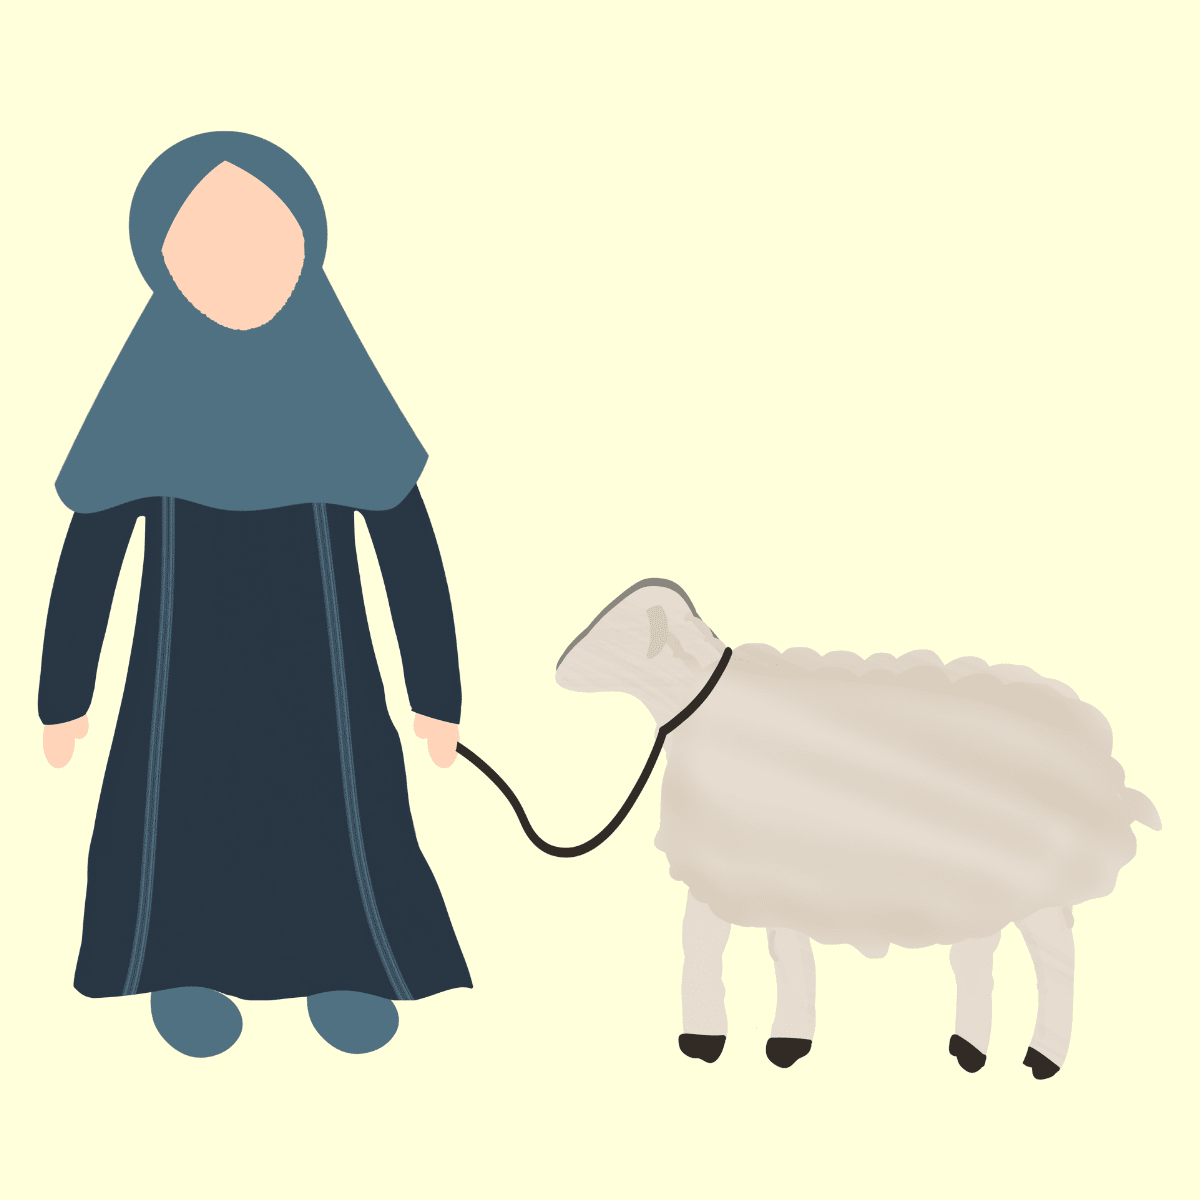 Woman shepherd and a sheep drawing